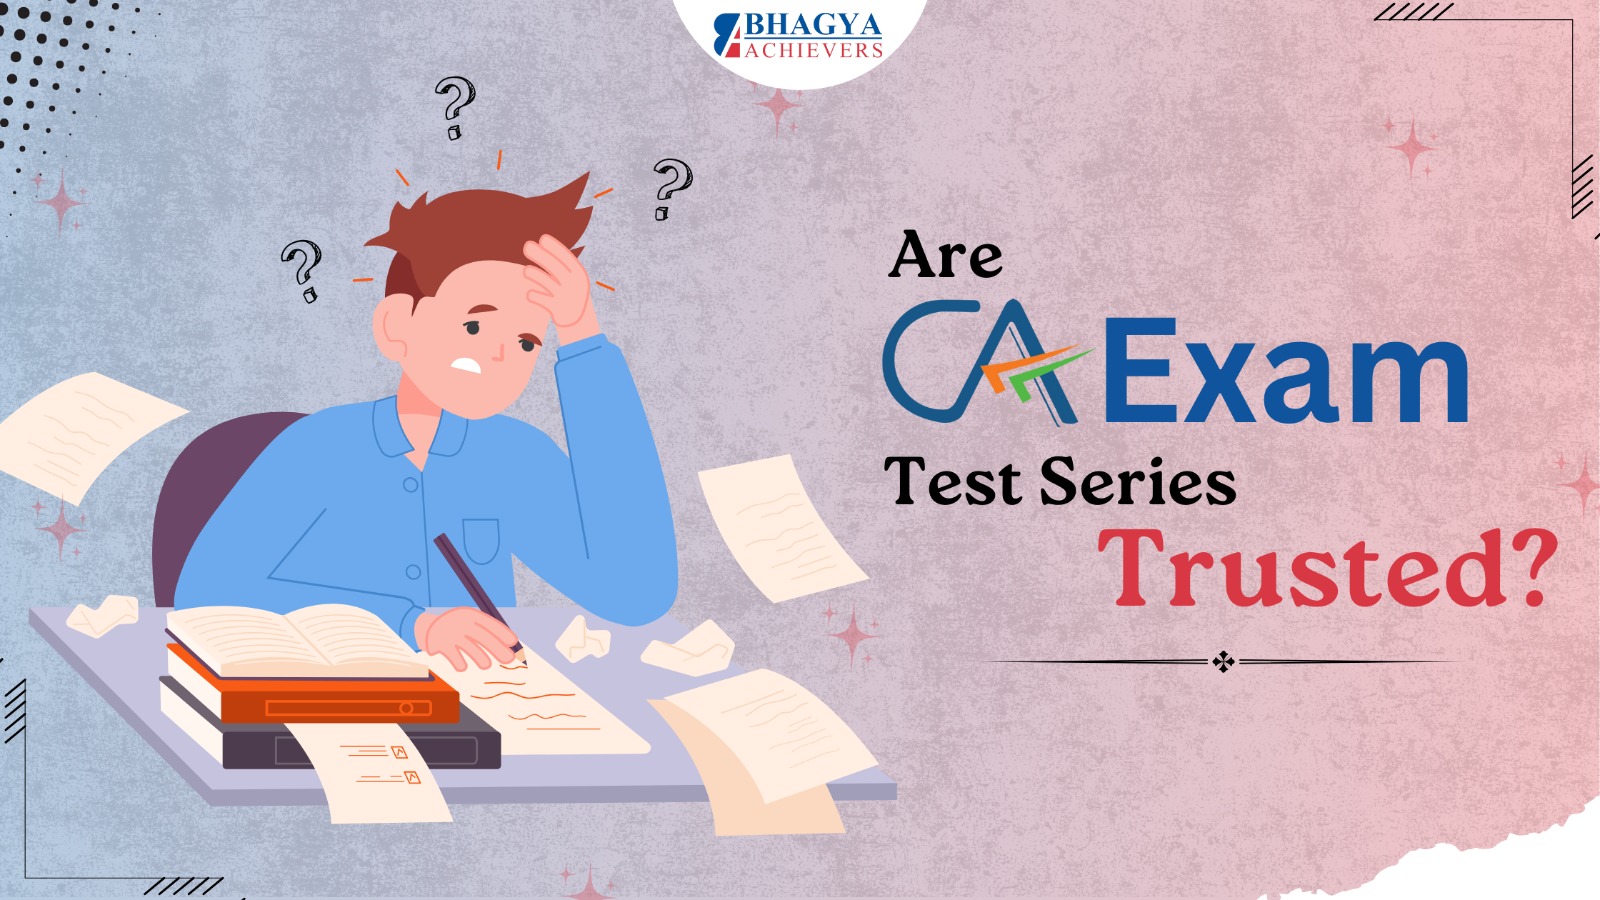 Are CA exam test series trusted? - Bhagya Achievers